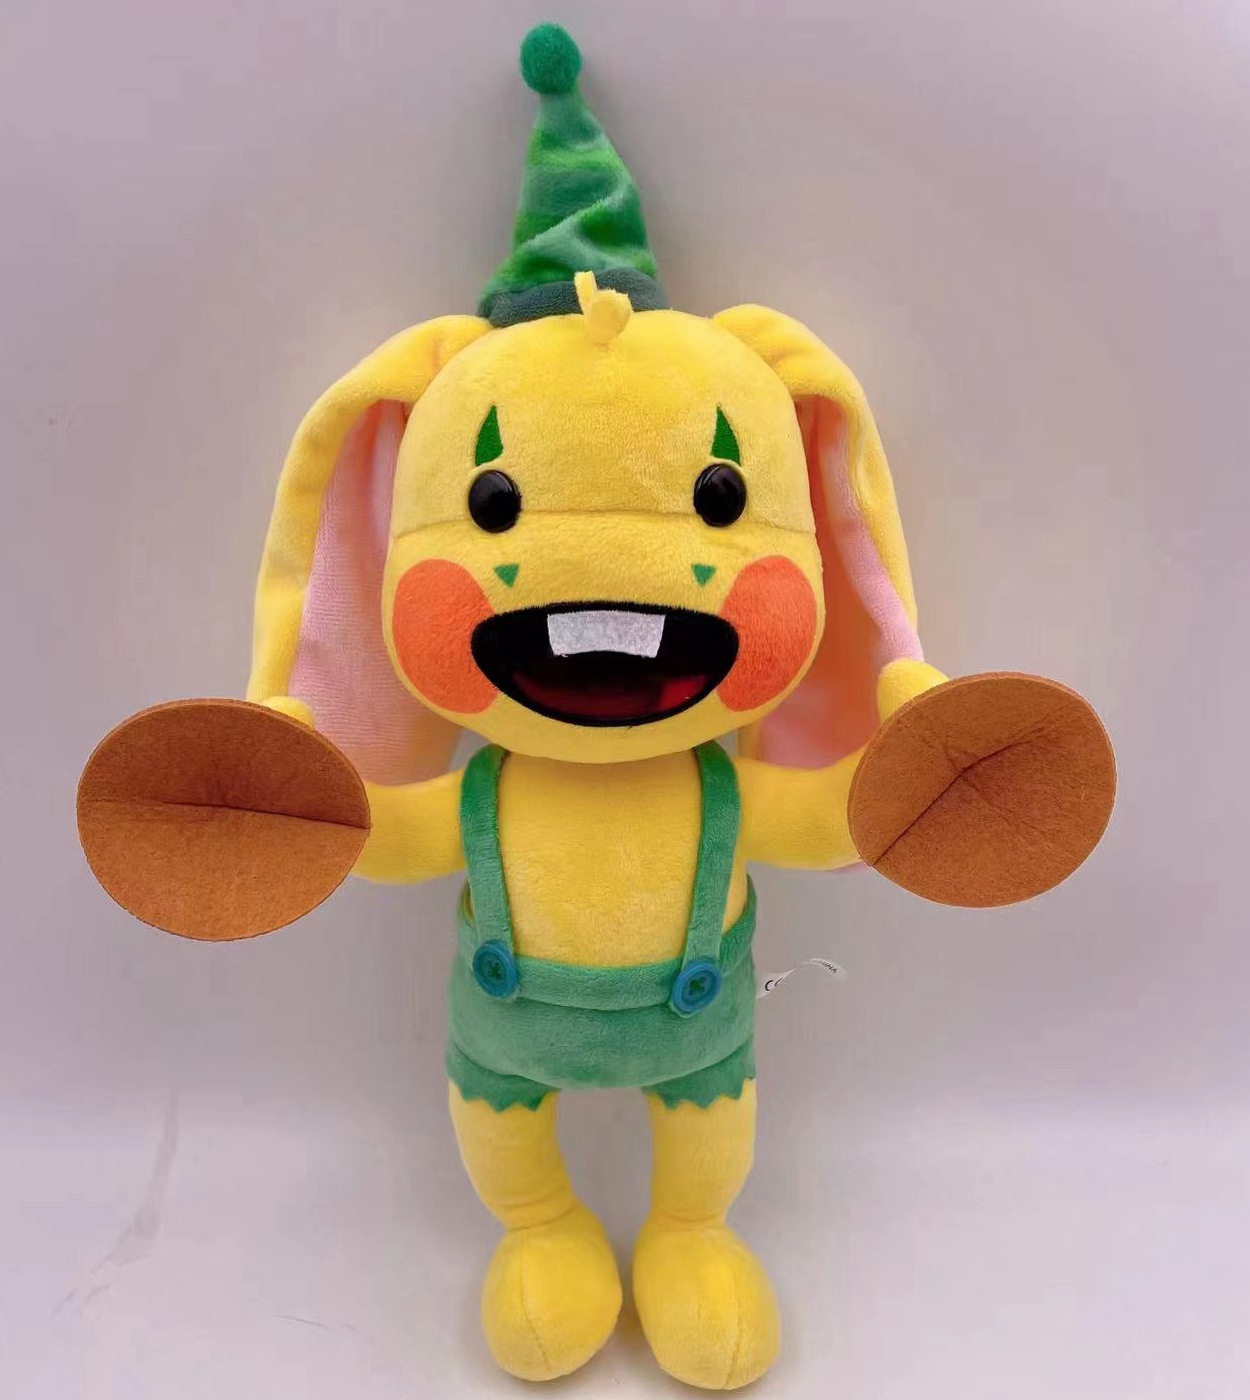 Bunzo Bunny Soft Toy, Poppy Playtime Huggy Wuggy Fabric Doll